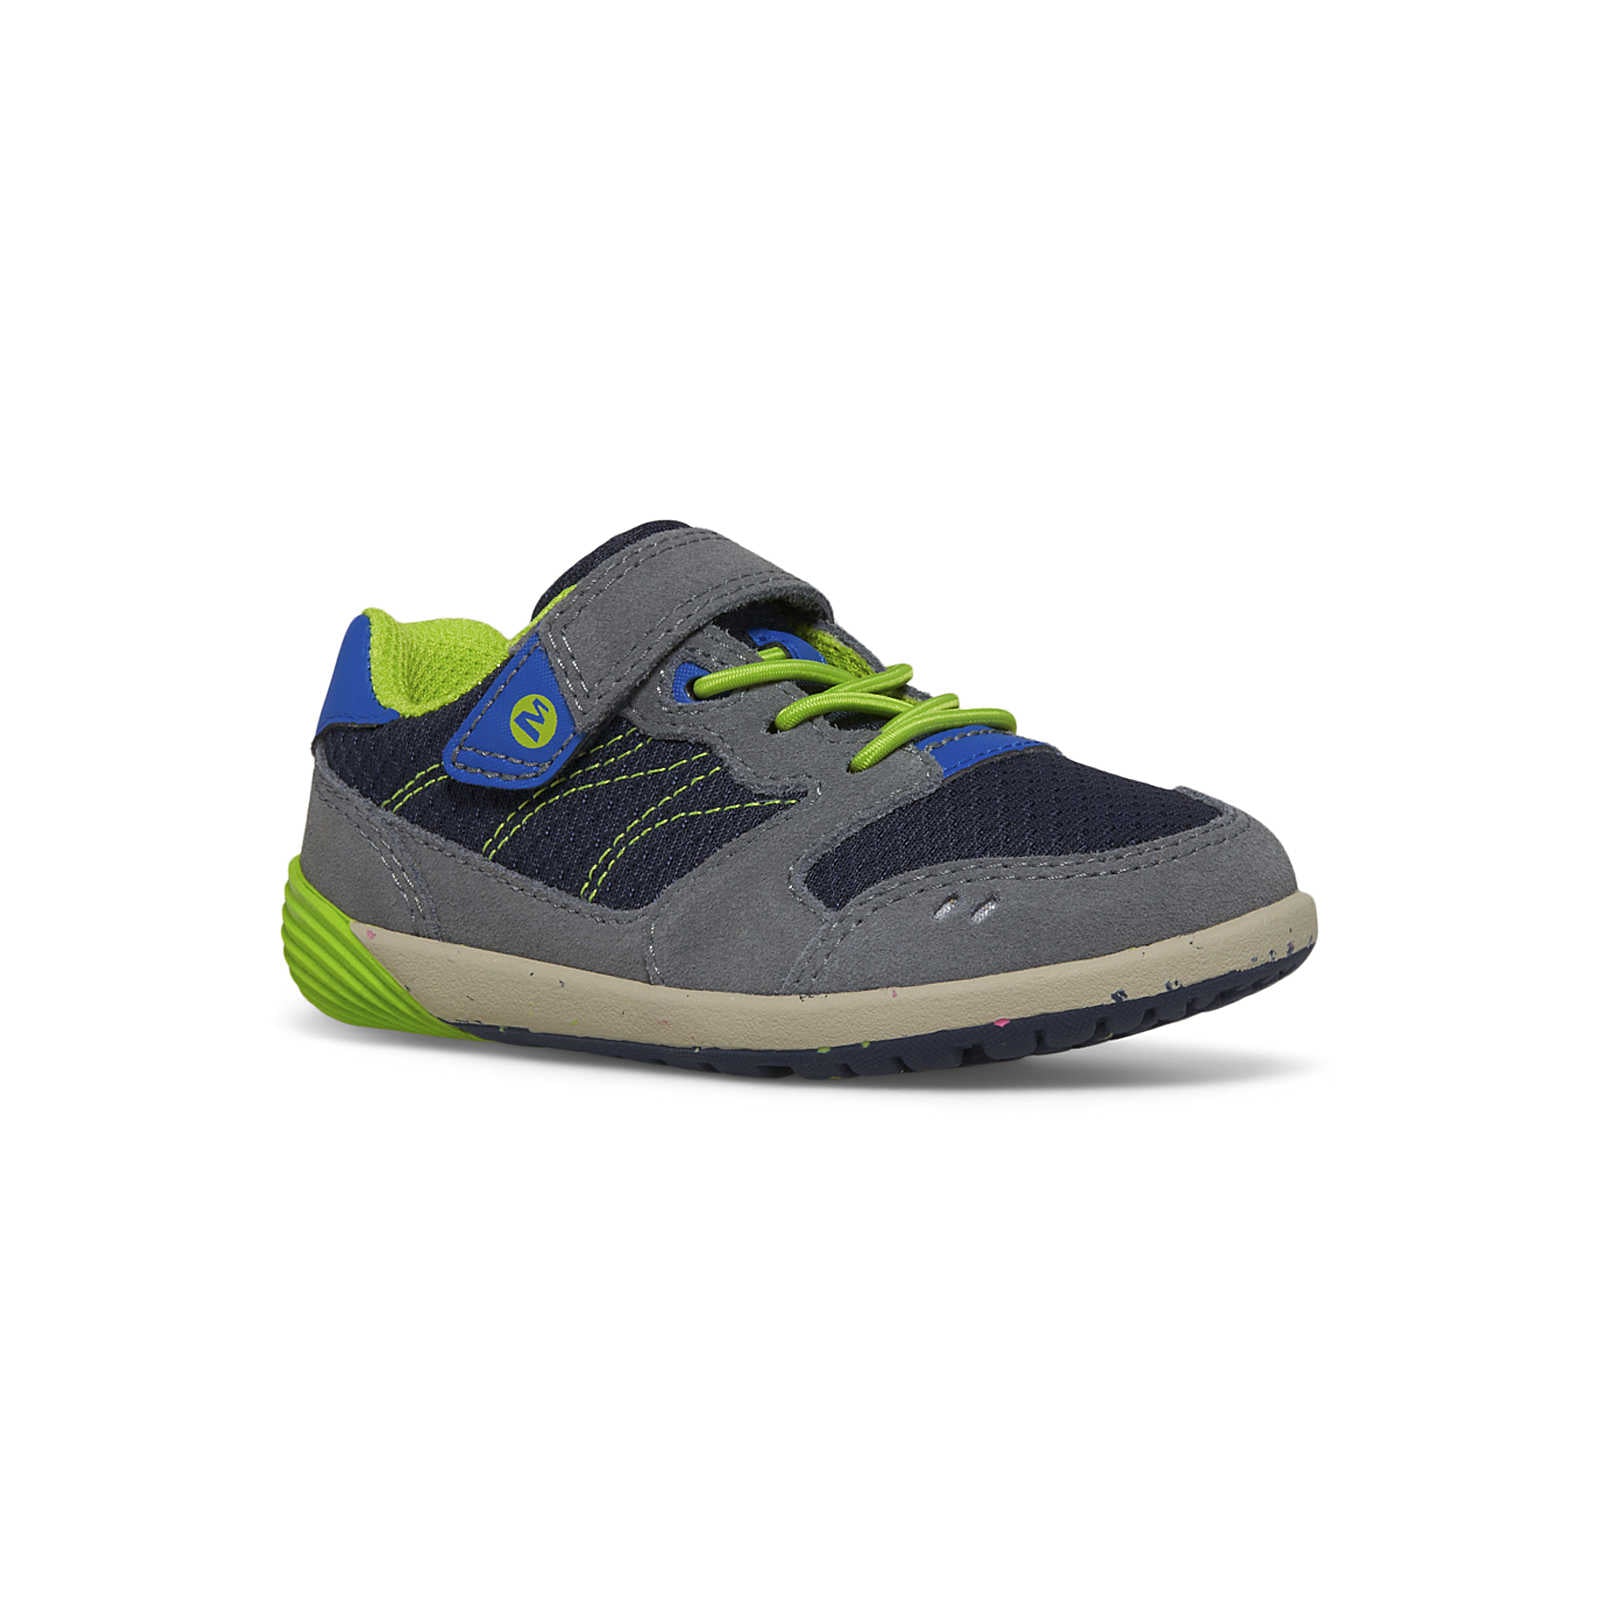 Bare Steps® Kid's A83 Sneaker - Navy/Green